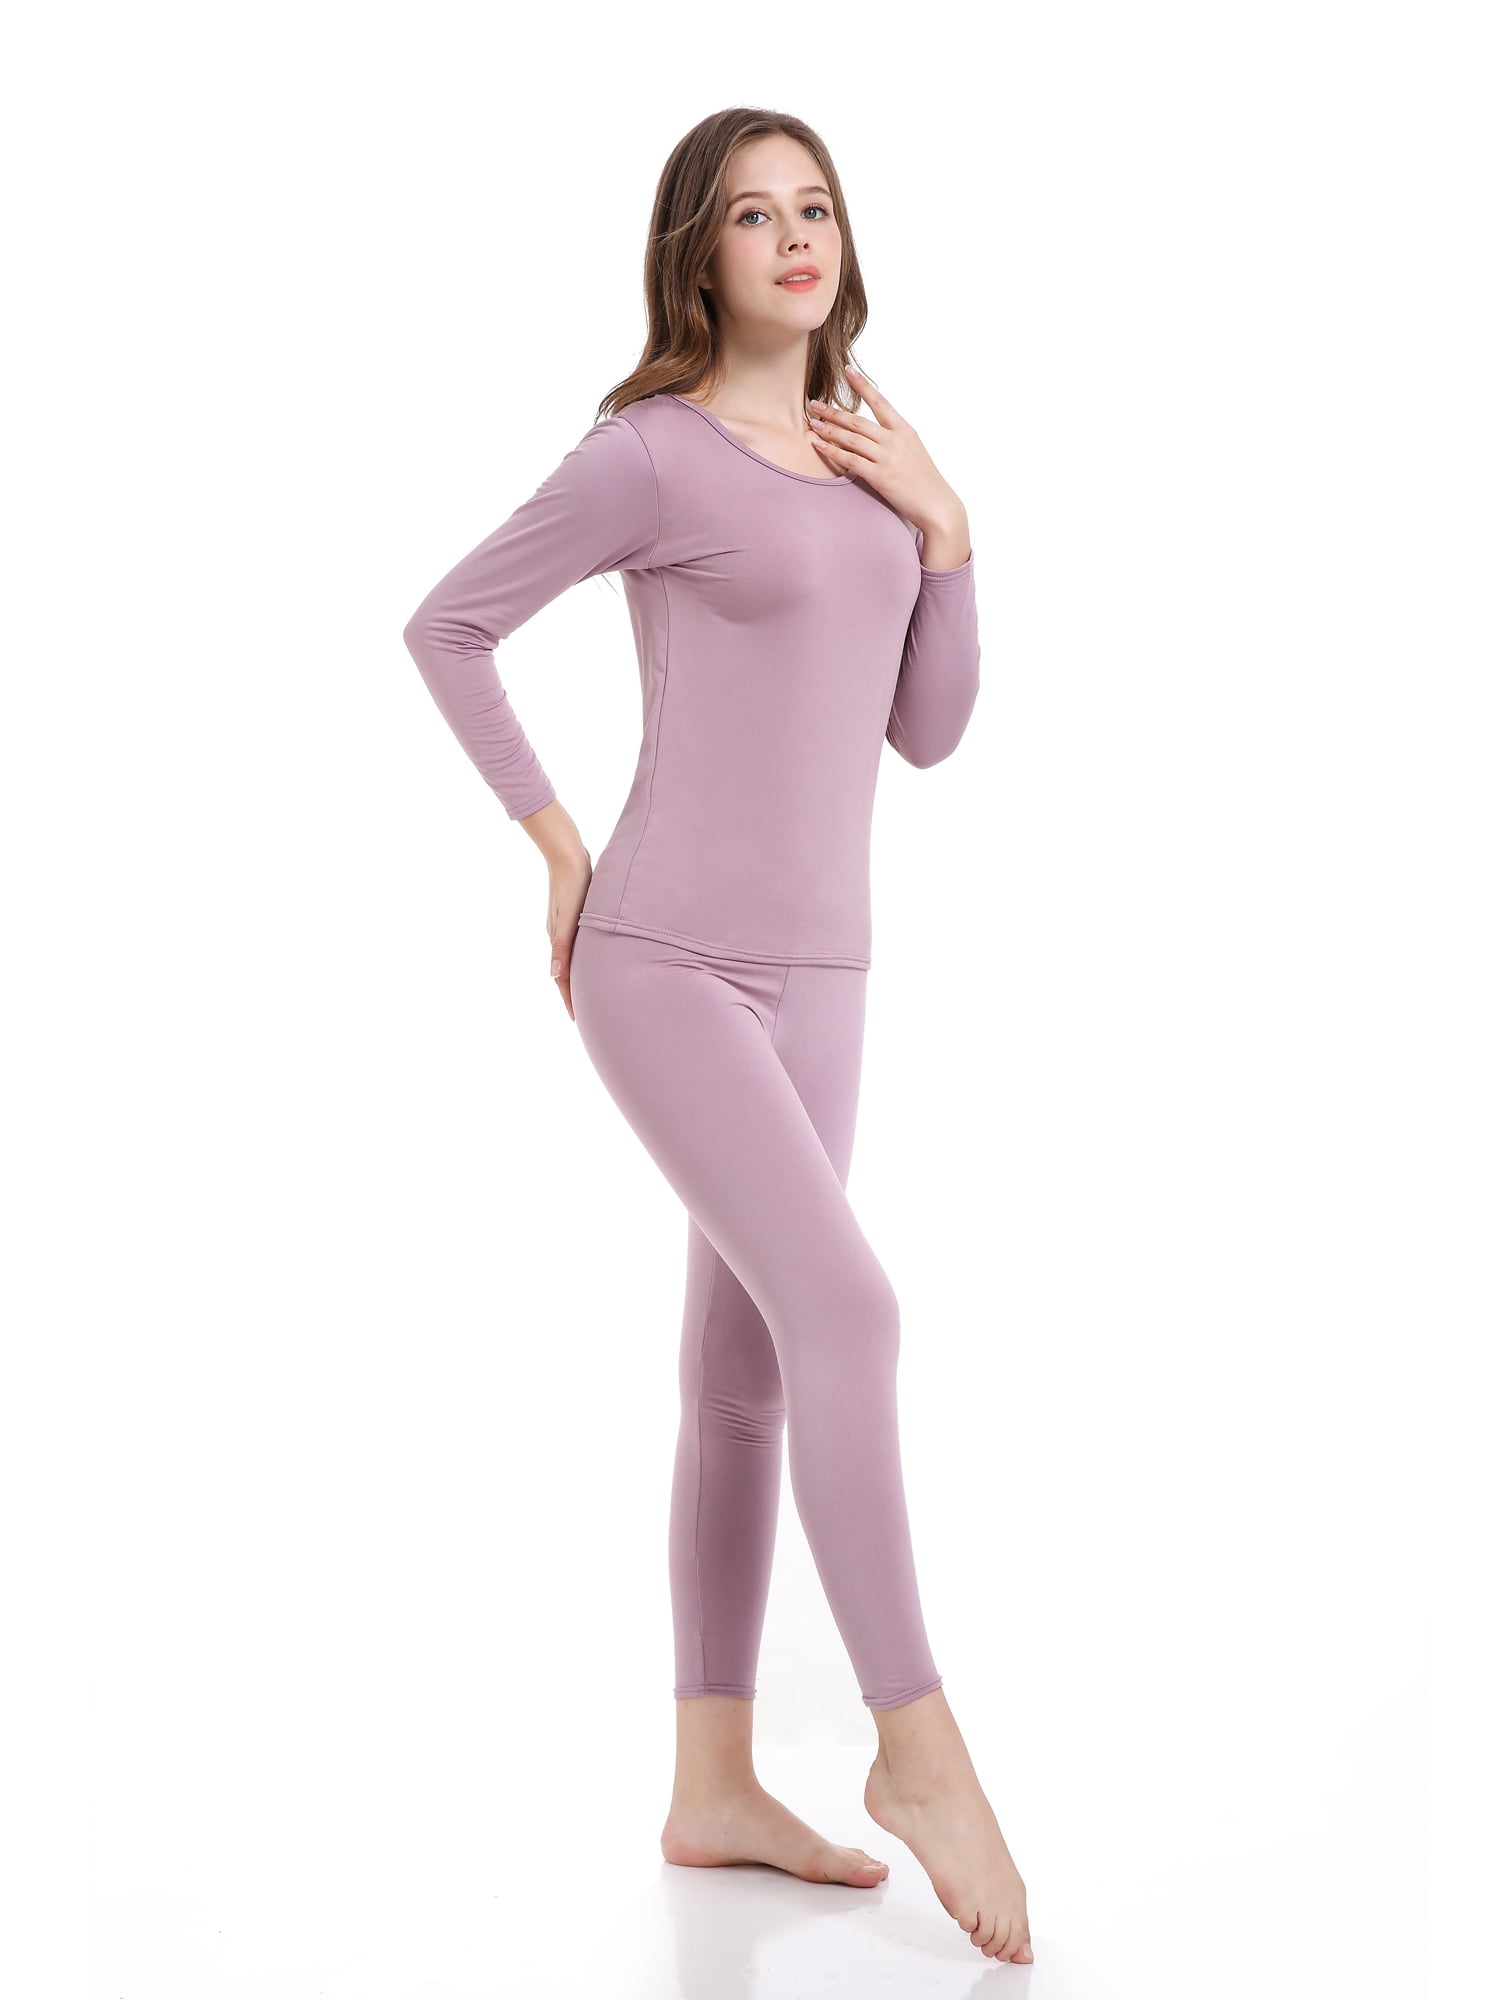 NUONITA Thermal Underwear for Women Long Johns Set Plus Size Fleece Lined Ultra Soft 